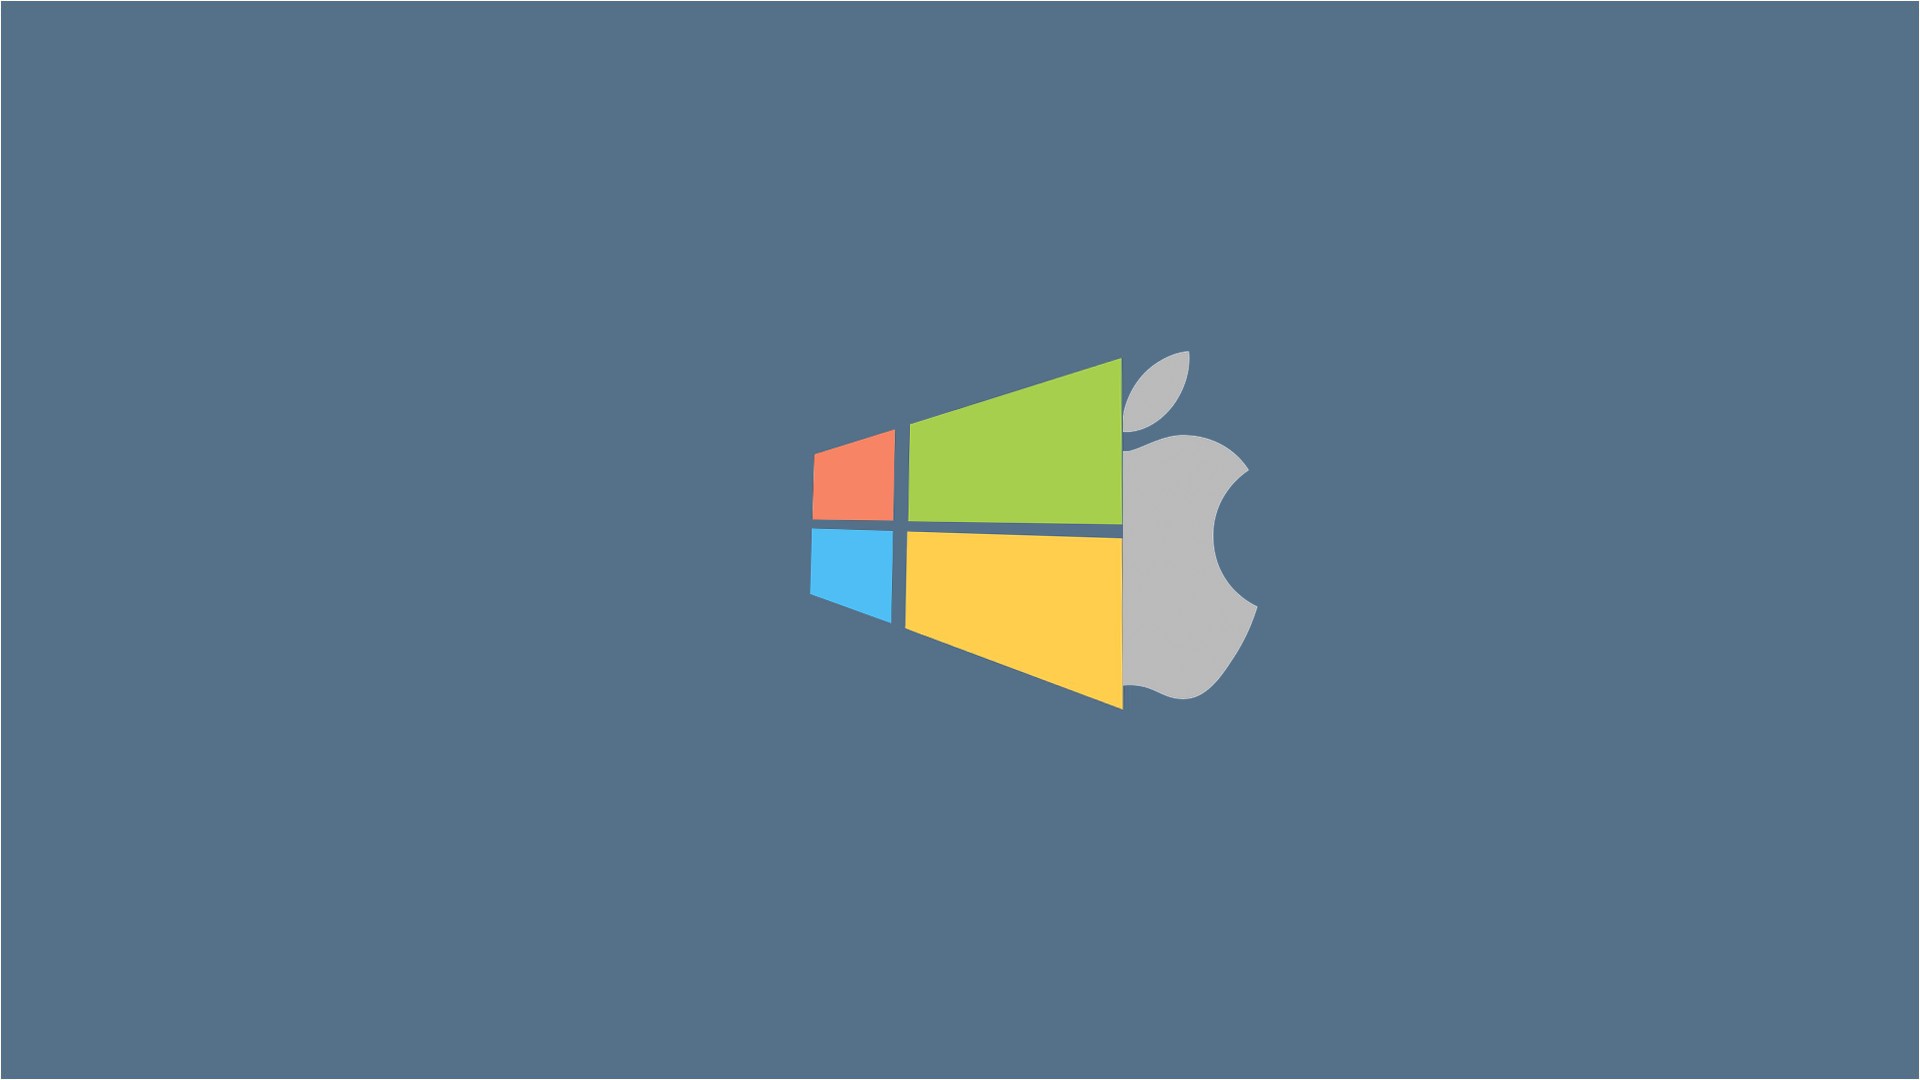 download the new for apple Microsoft .NET Desktop Runtime 7.0.7